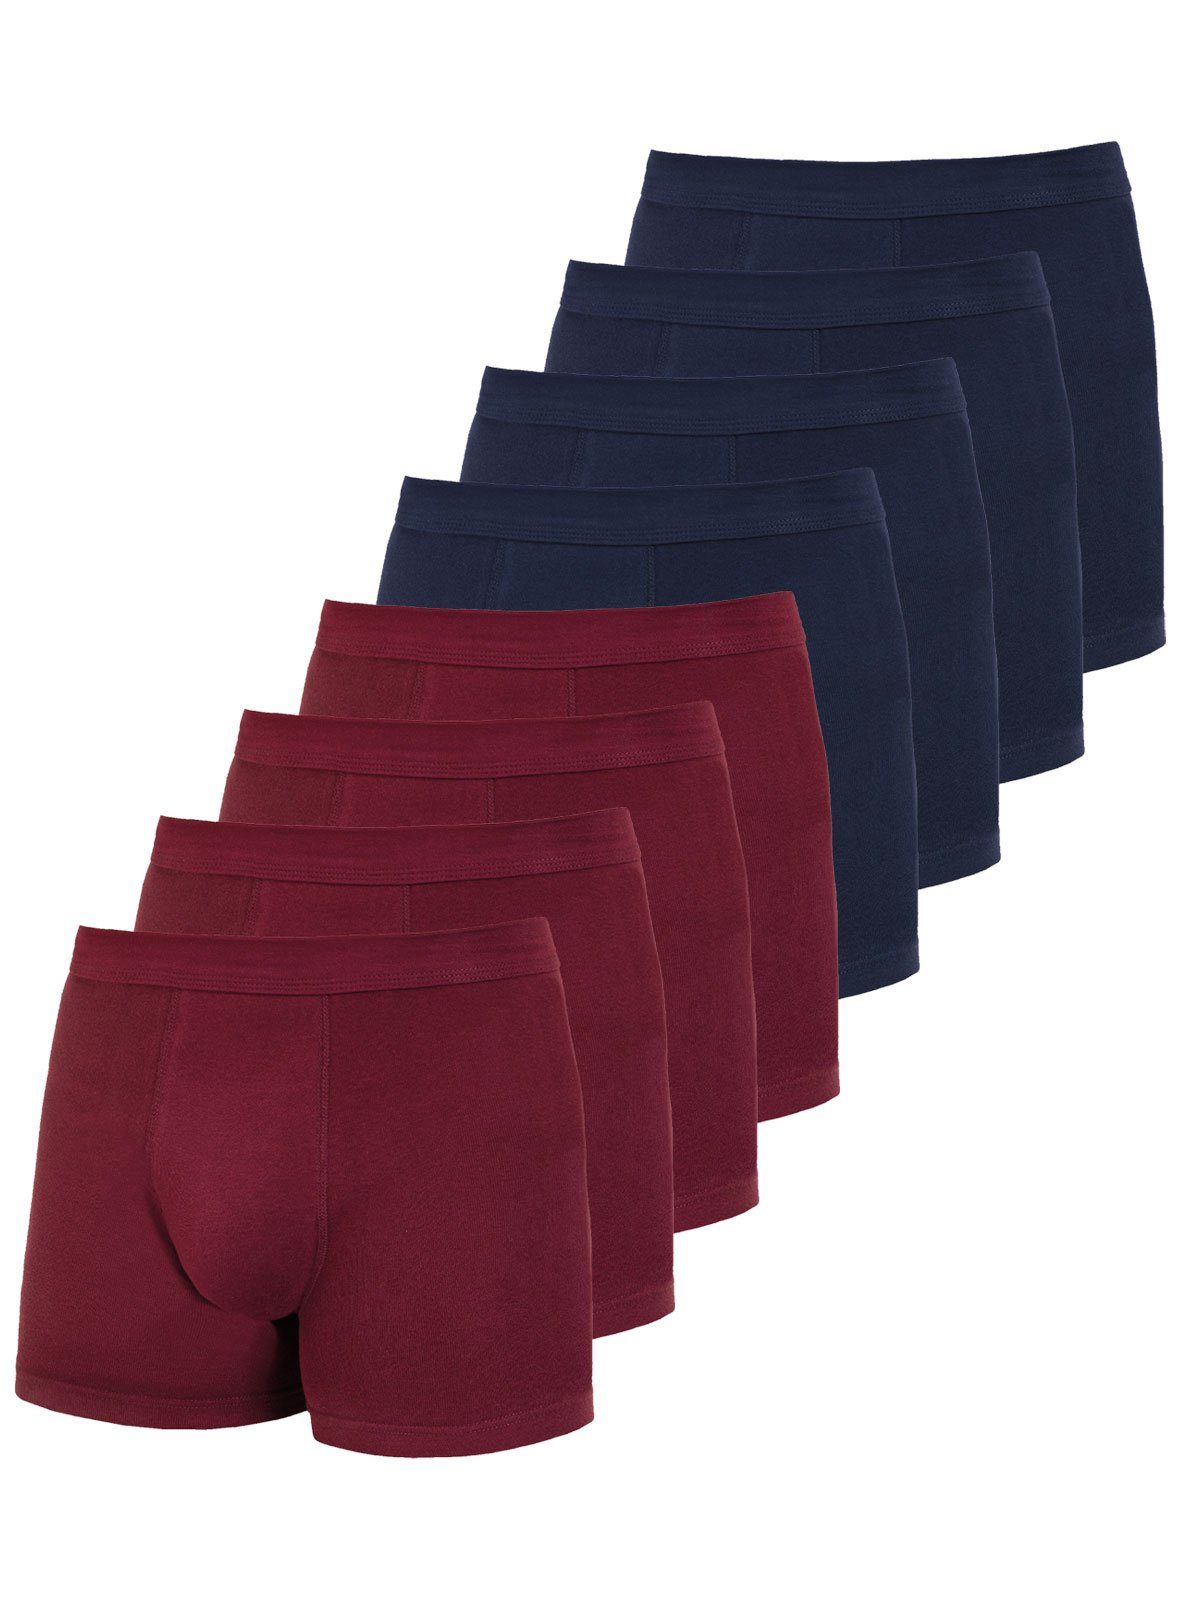 Cotton - Pants Herren Sparpack Bio 8er navy (Spar-Set, Pants 8-St) rubin Retro KUMPF